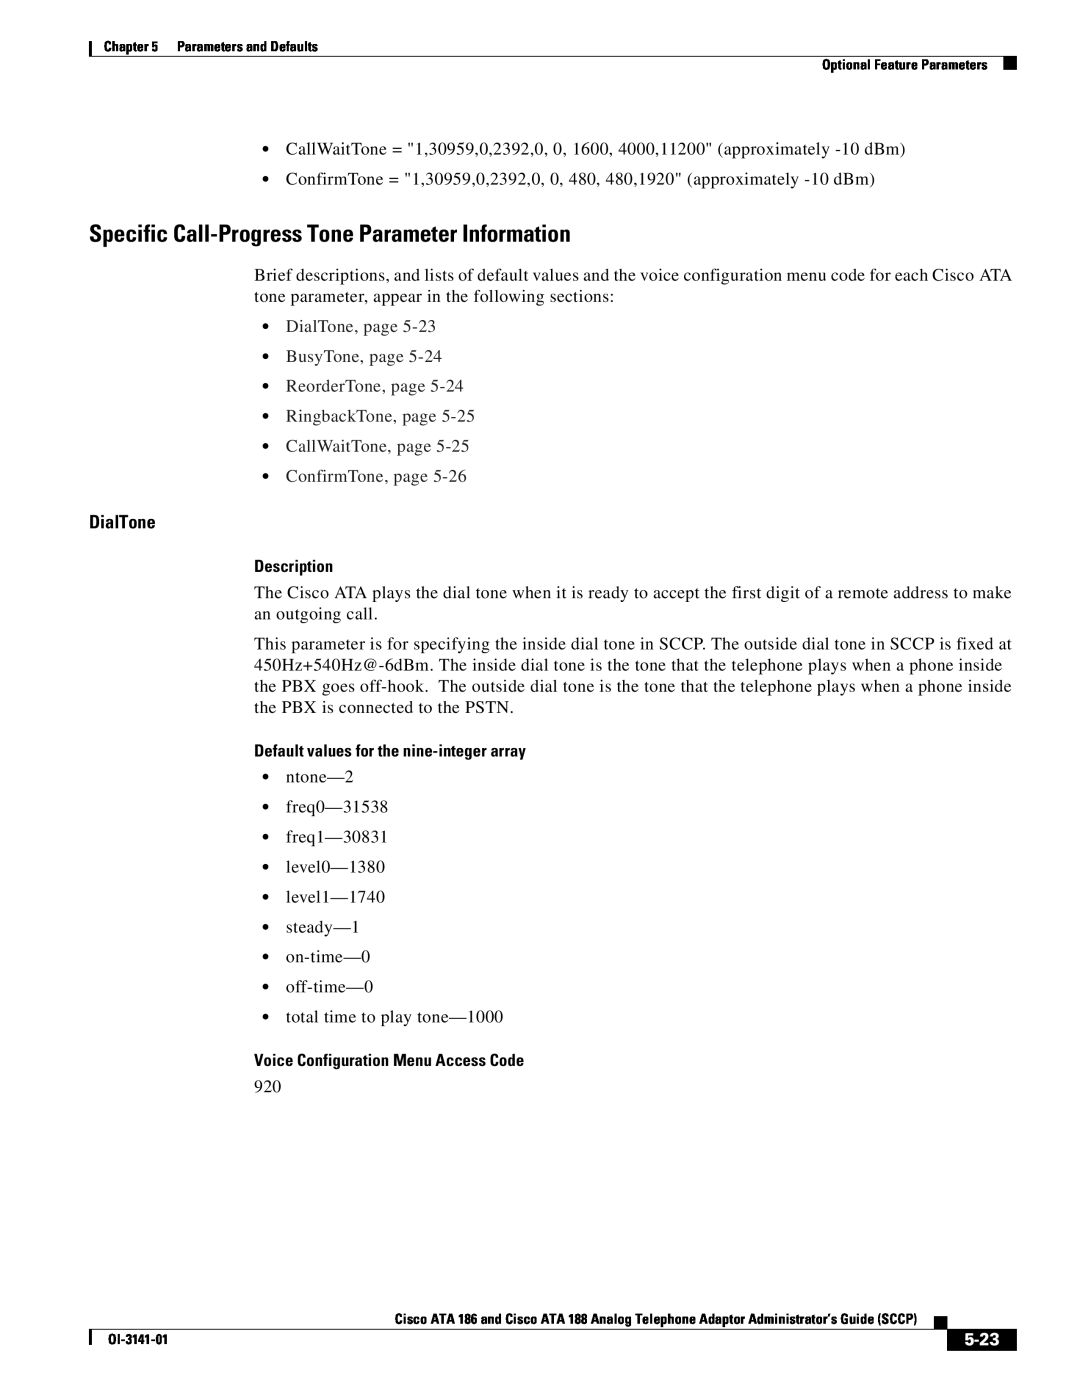 Cisco Systems ATA 188 Specific Call-Progress Tone Parameter Information, DialTone, CallWaitTone, page ConfirmTone, page 